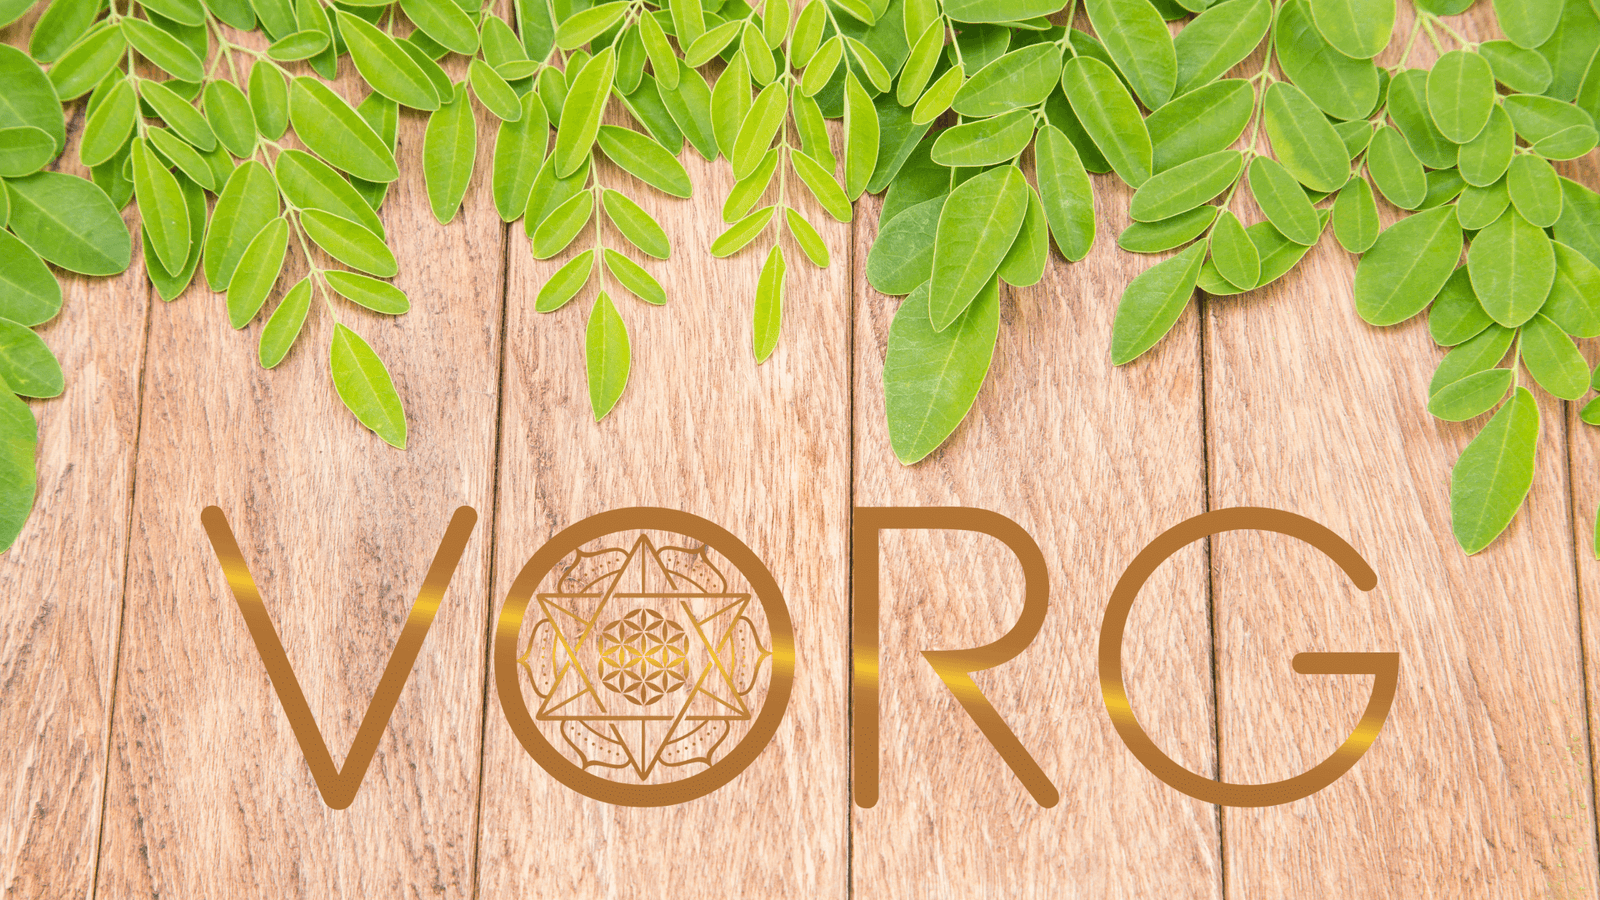 Moringa leaves and powder showcasing its superfood benefits.